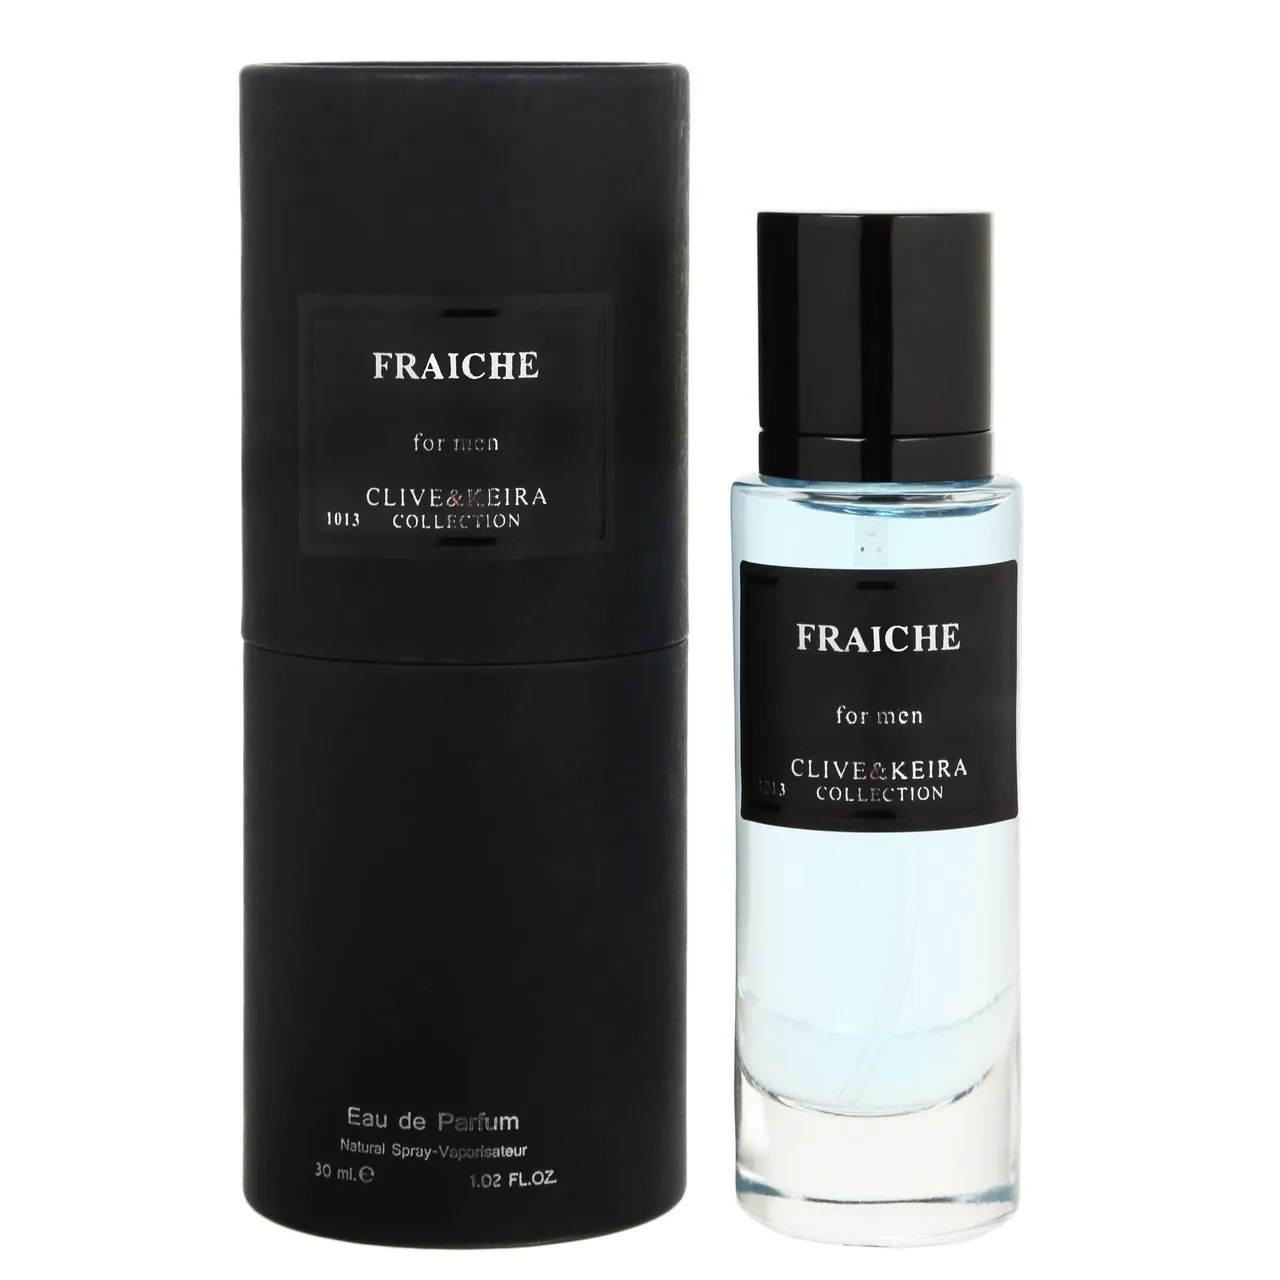 Parfum suvi Clive Keira 1013 Versace Man Eau Fraiche Versace, erkaklar uchun, 30 ml#1